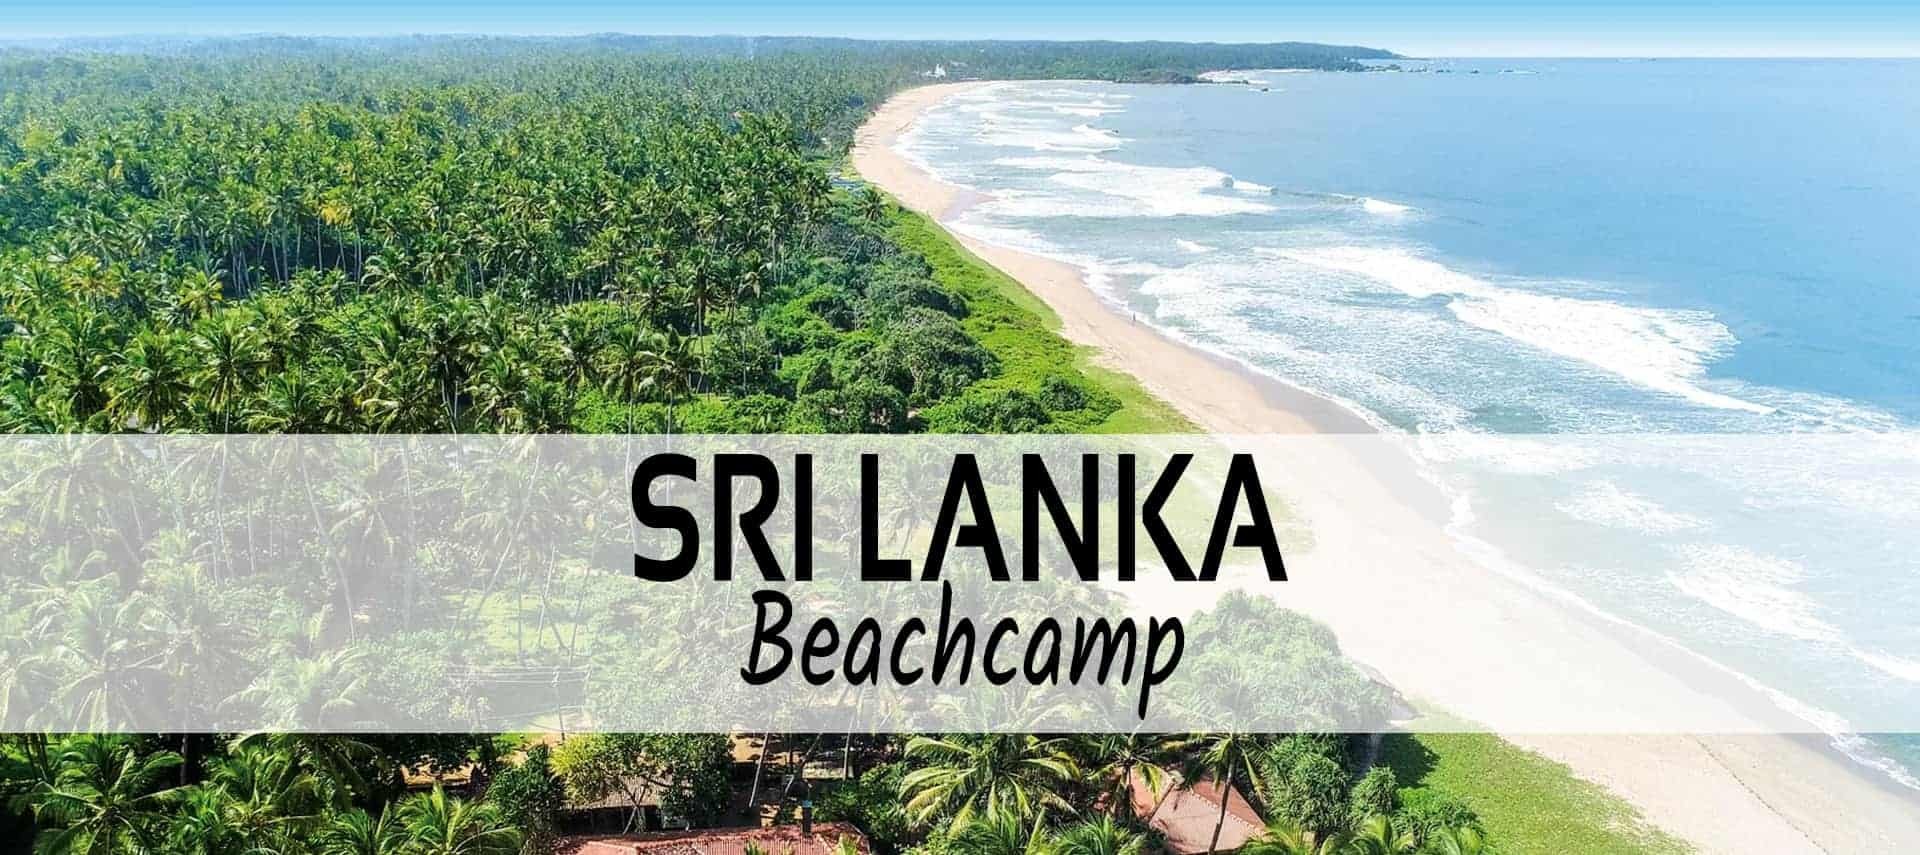 Beach volleyball Surfing Sri Lanka